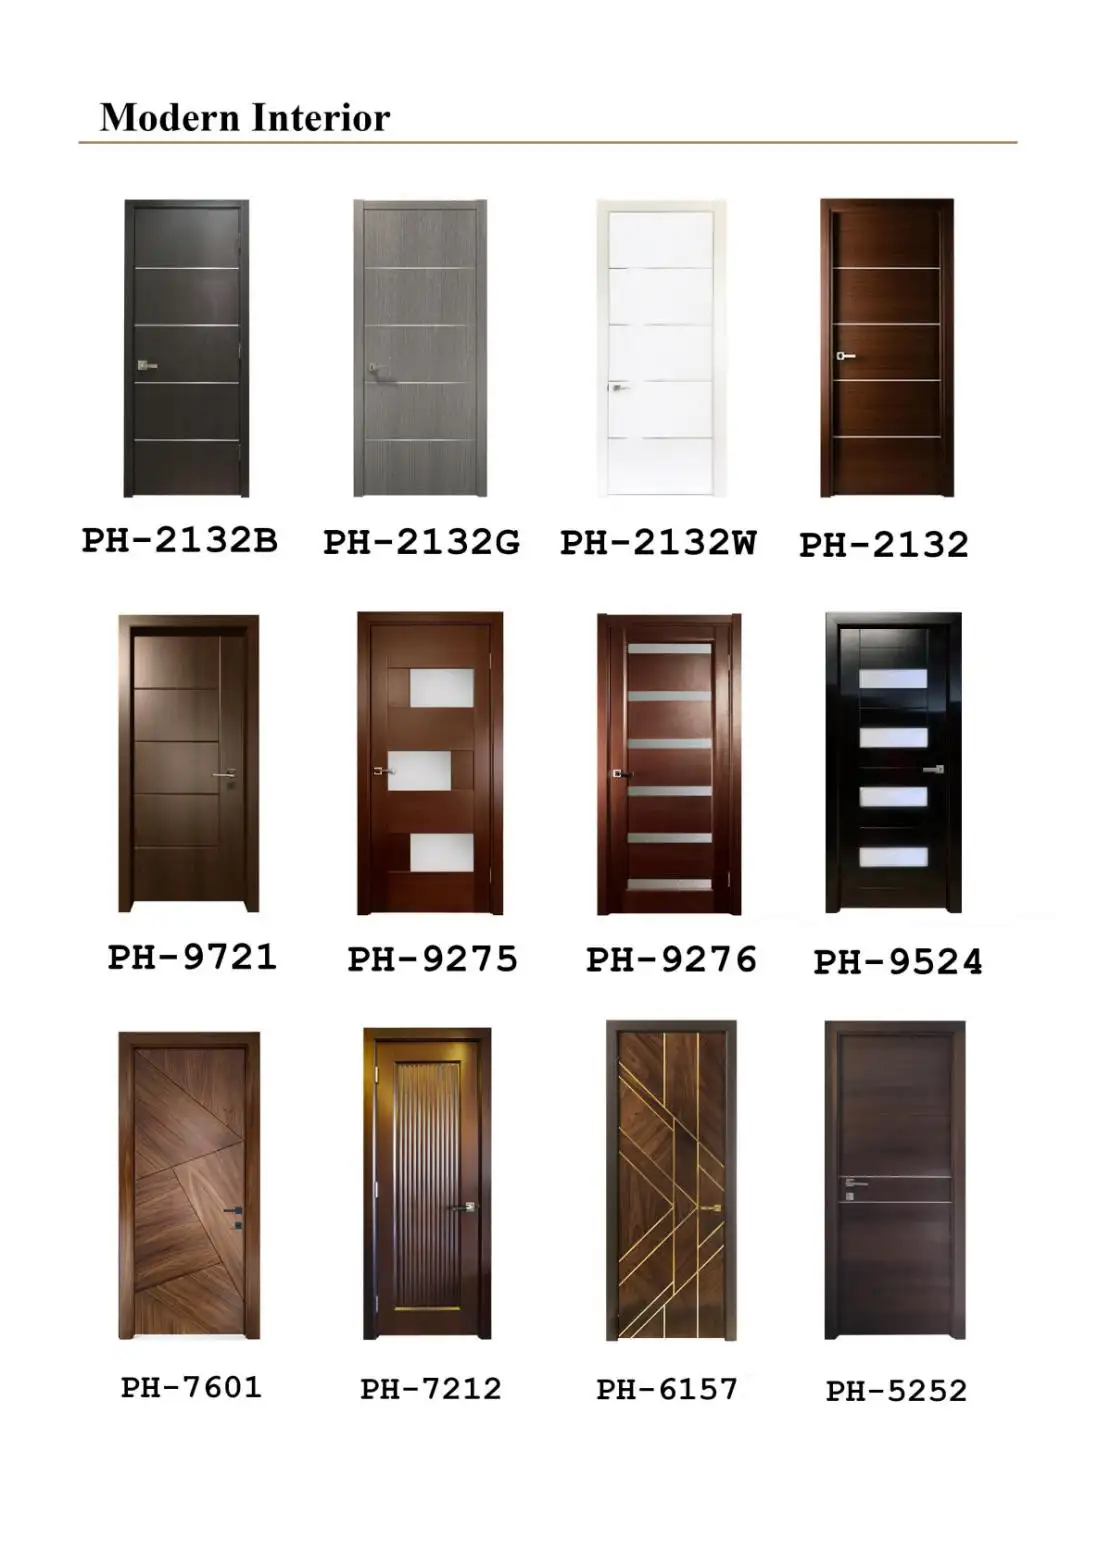 Prettwood-puerta de dormitorio de madera maciza, diseño moderno europeo, impermeable, precolgada